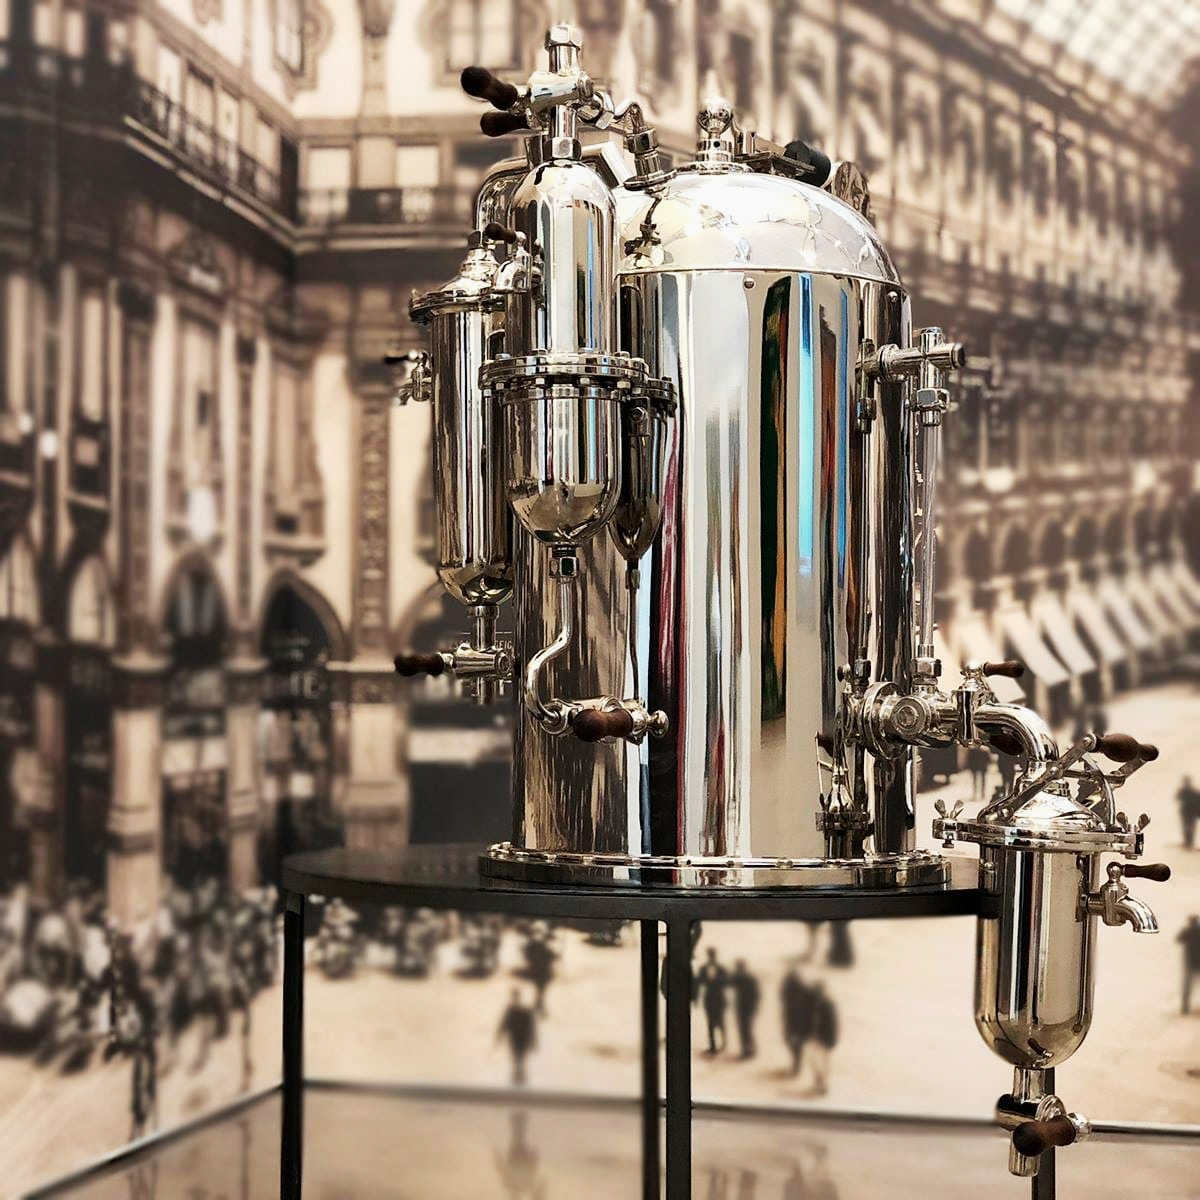 máy Espresso đầu tiên -Do Angelo Moriondo phát minh năm 1884